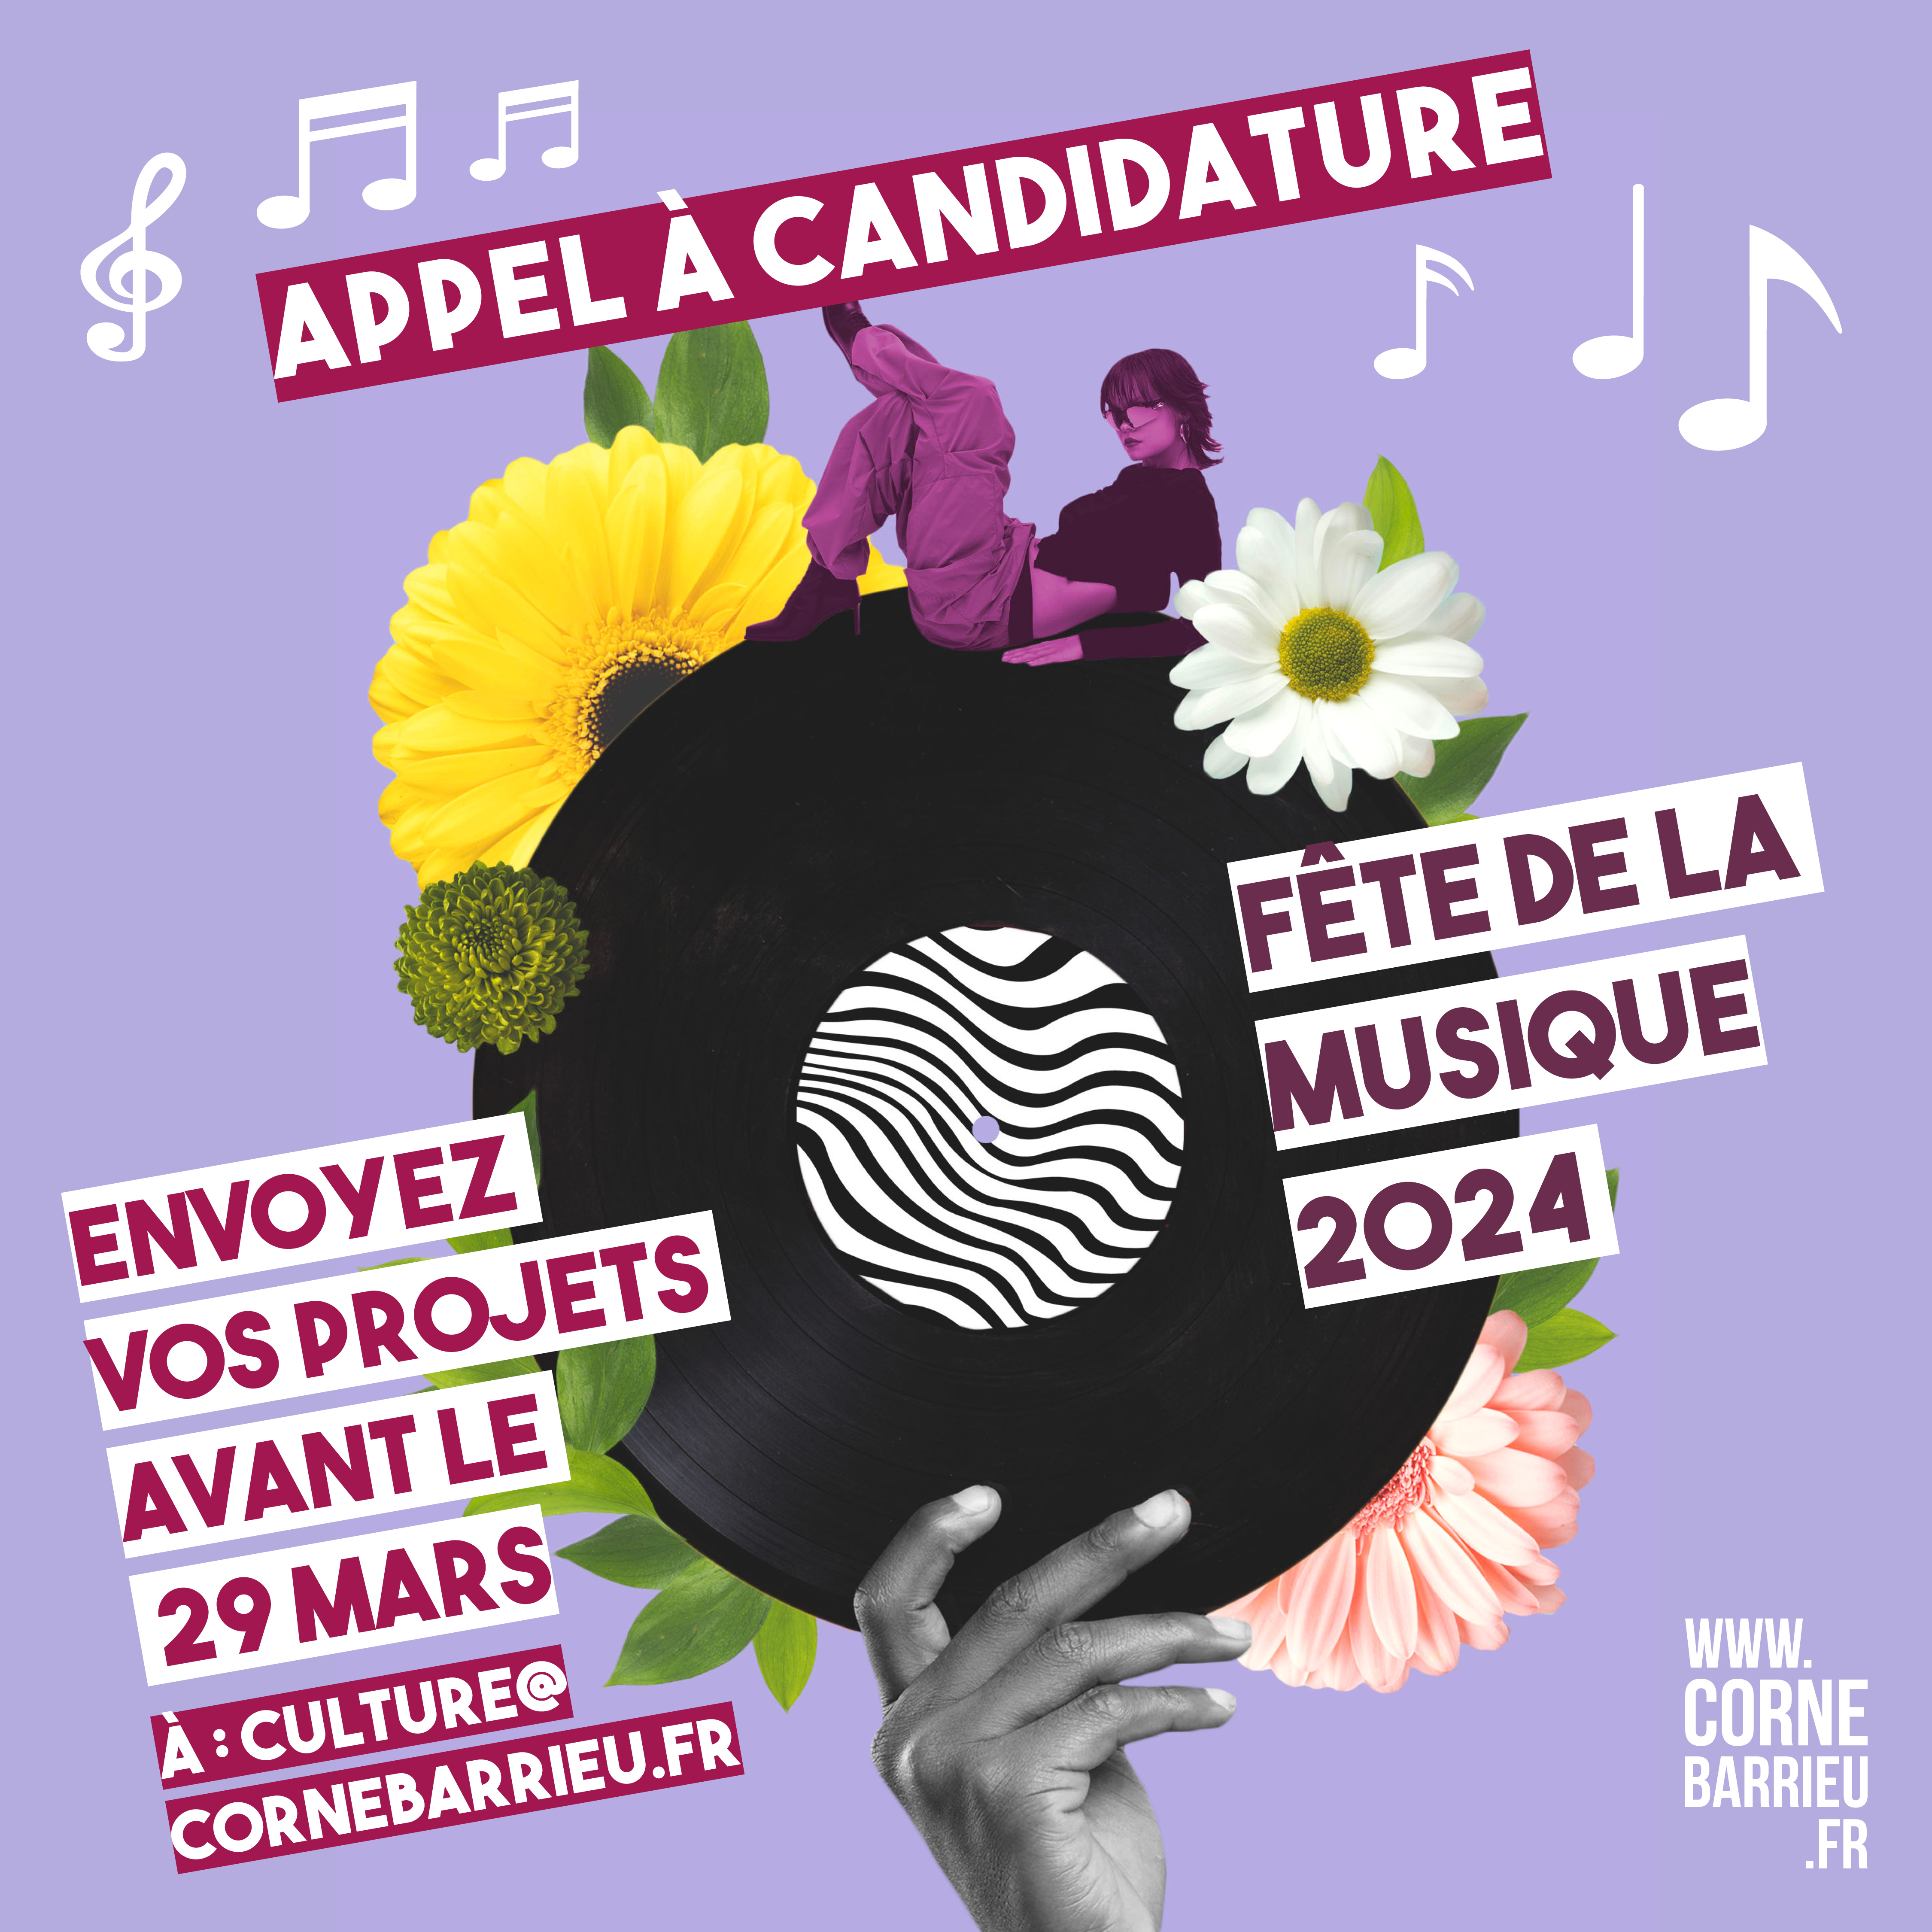 Insta_Candidature_Fete_musique_2024